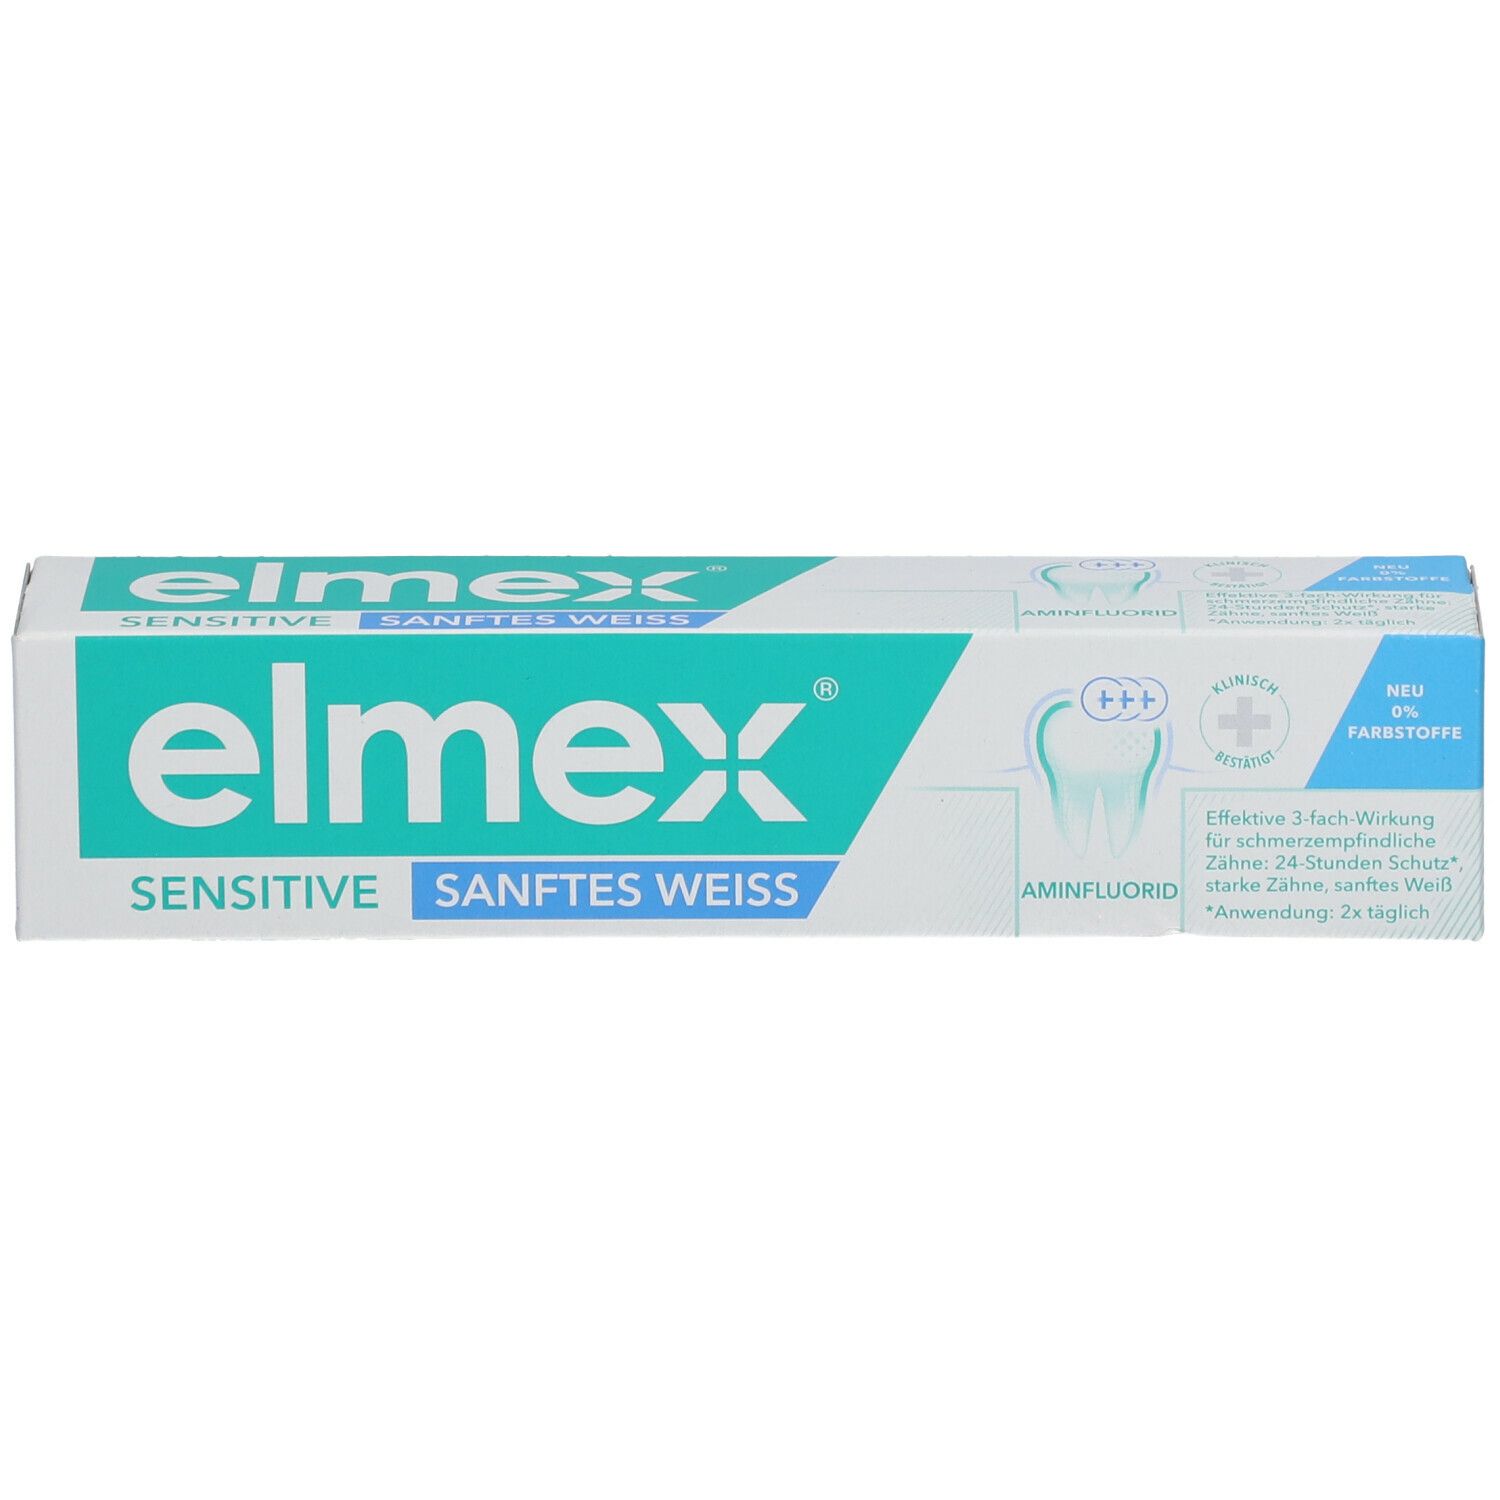 elmex Sensitive Sanftes Weiss Zahnpasta